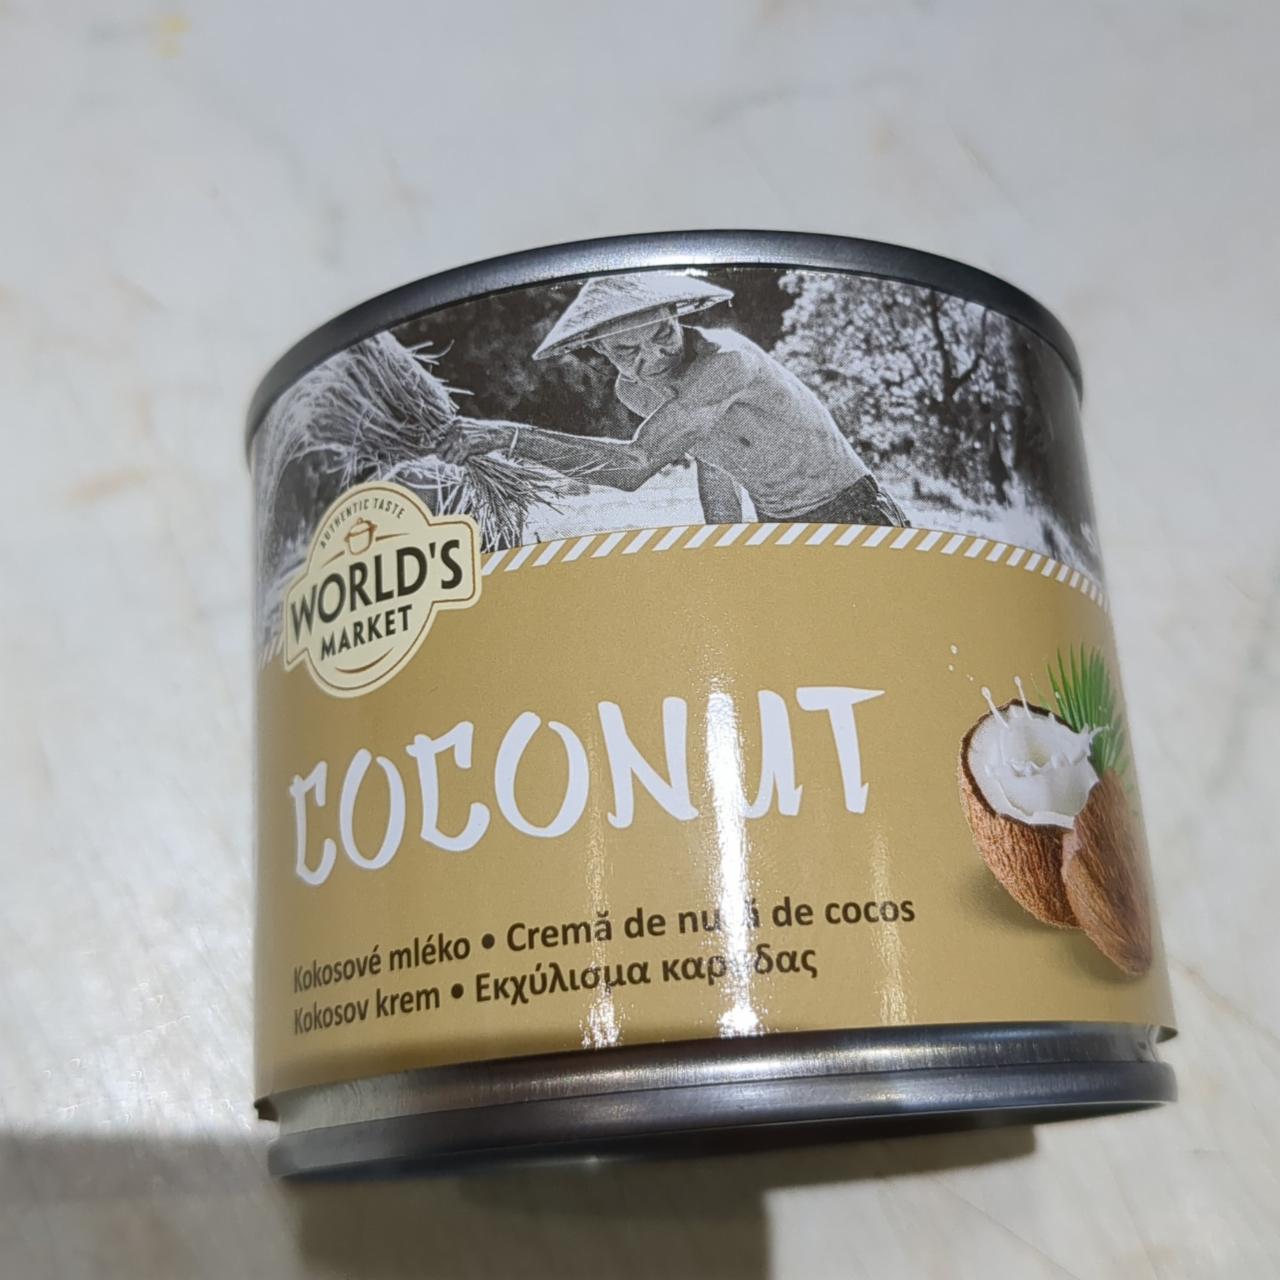 Fotografie - Coconut Milk World's market